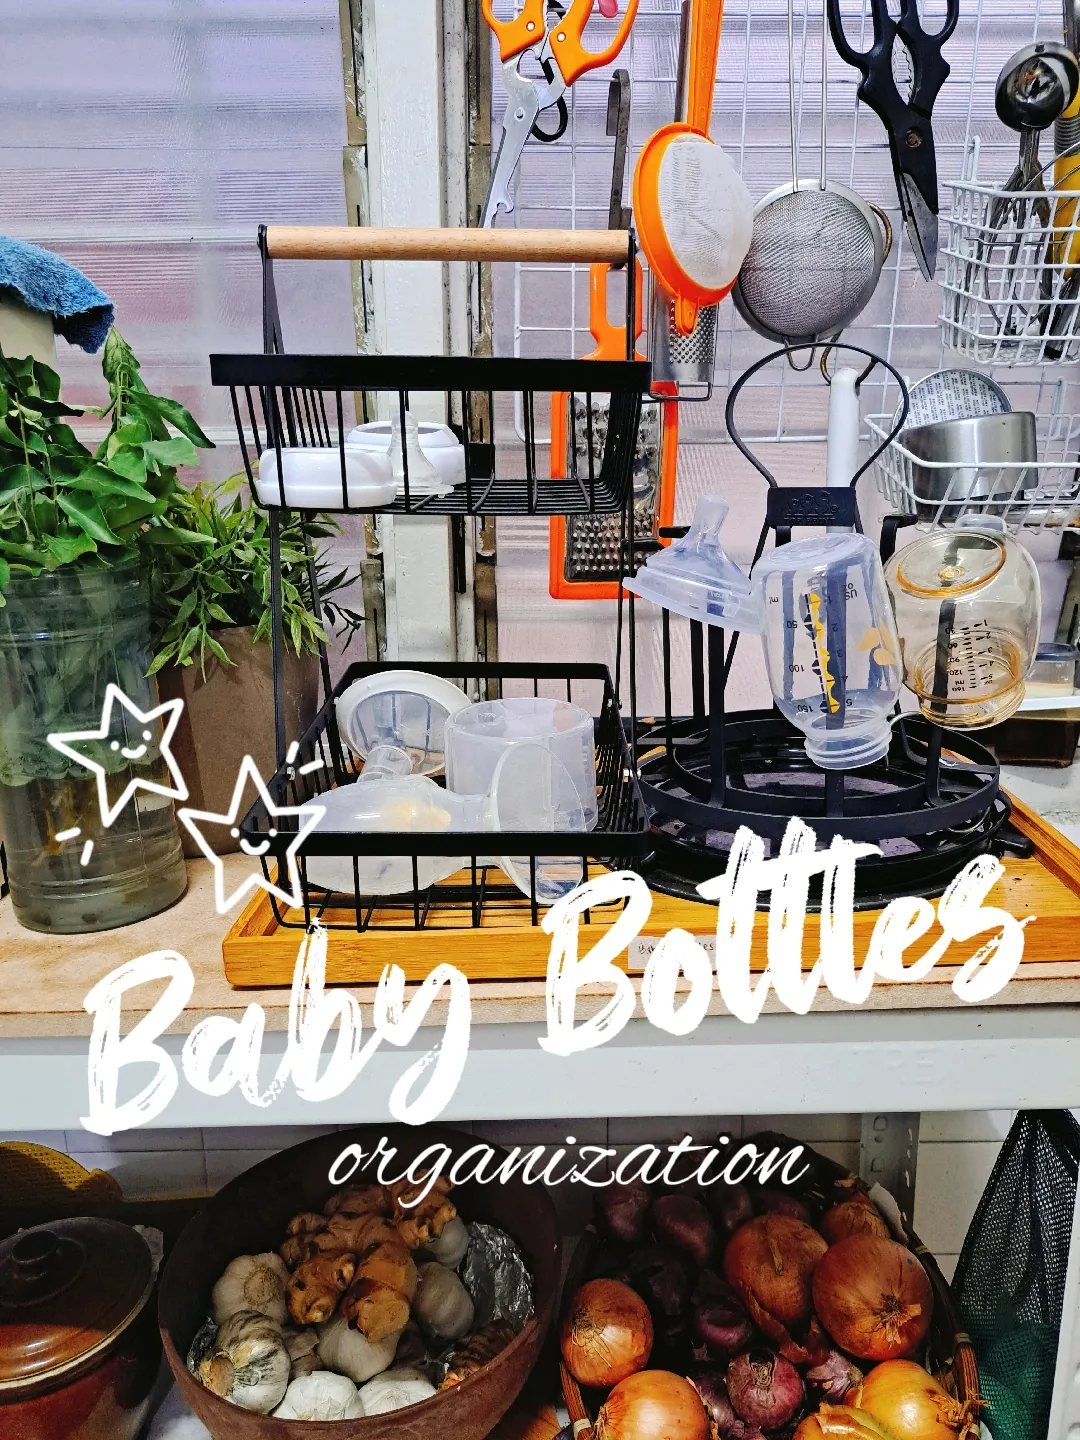 Baby bottle organization  Baby bottle organization, Baby bottle